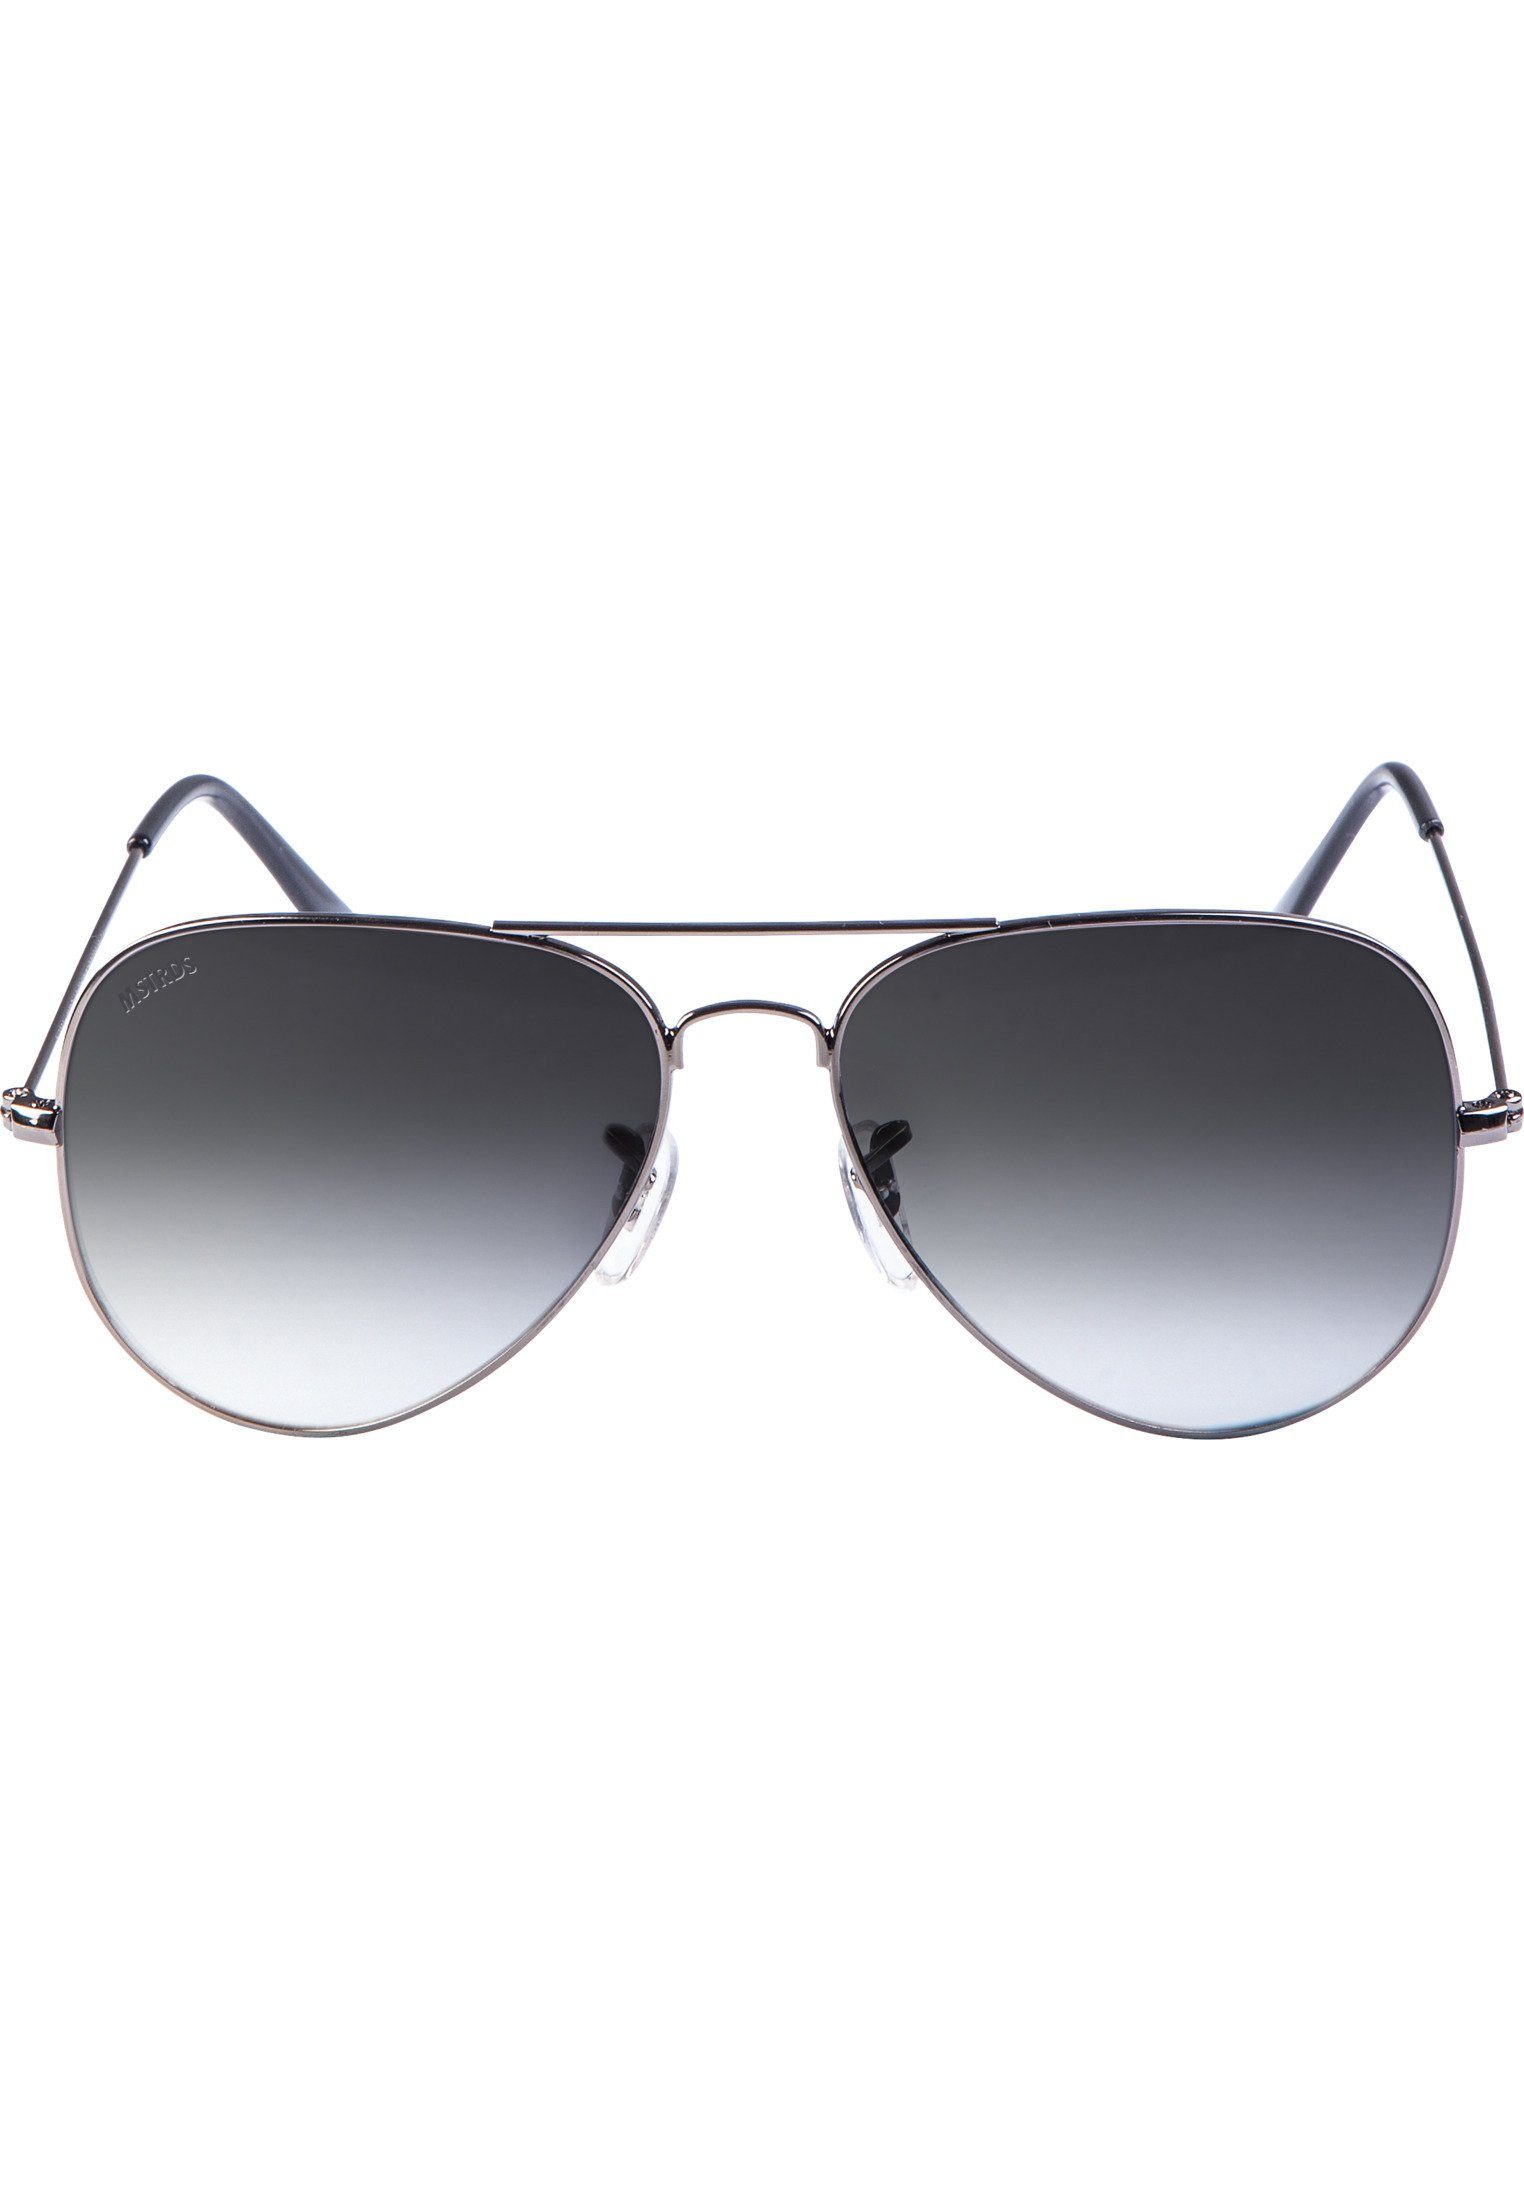 Sonnenbrille PureAv gun/grey MSTRDS Accessoires Sunglasses